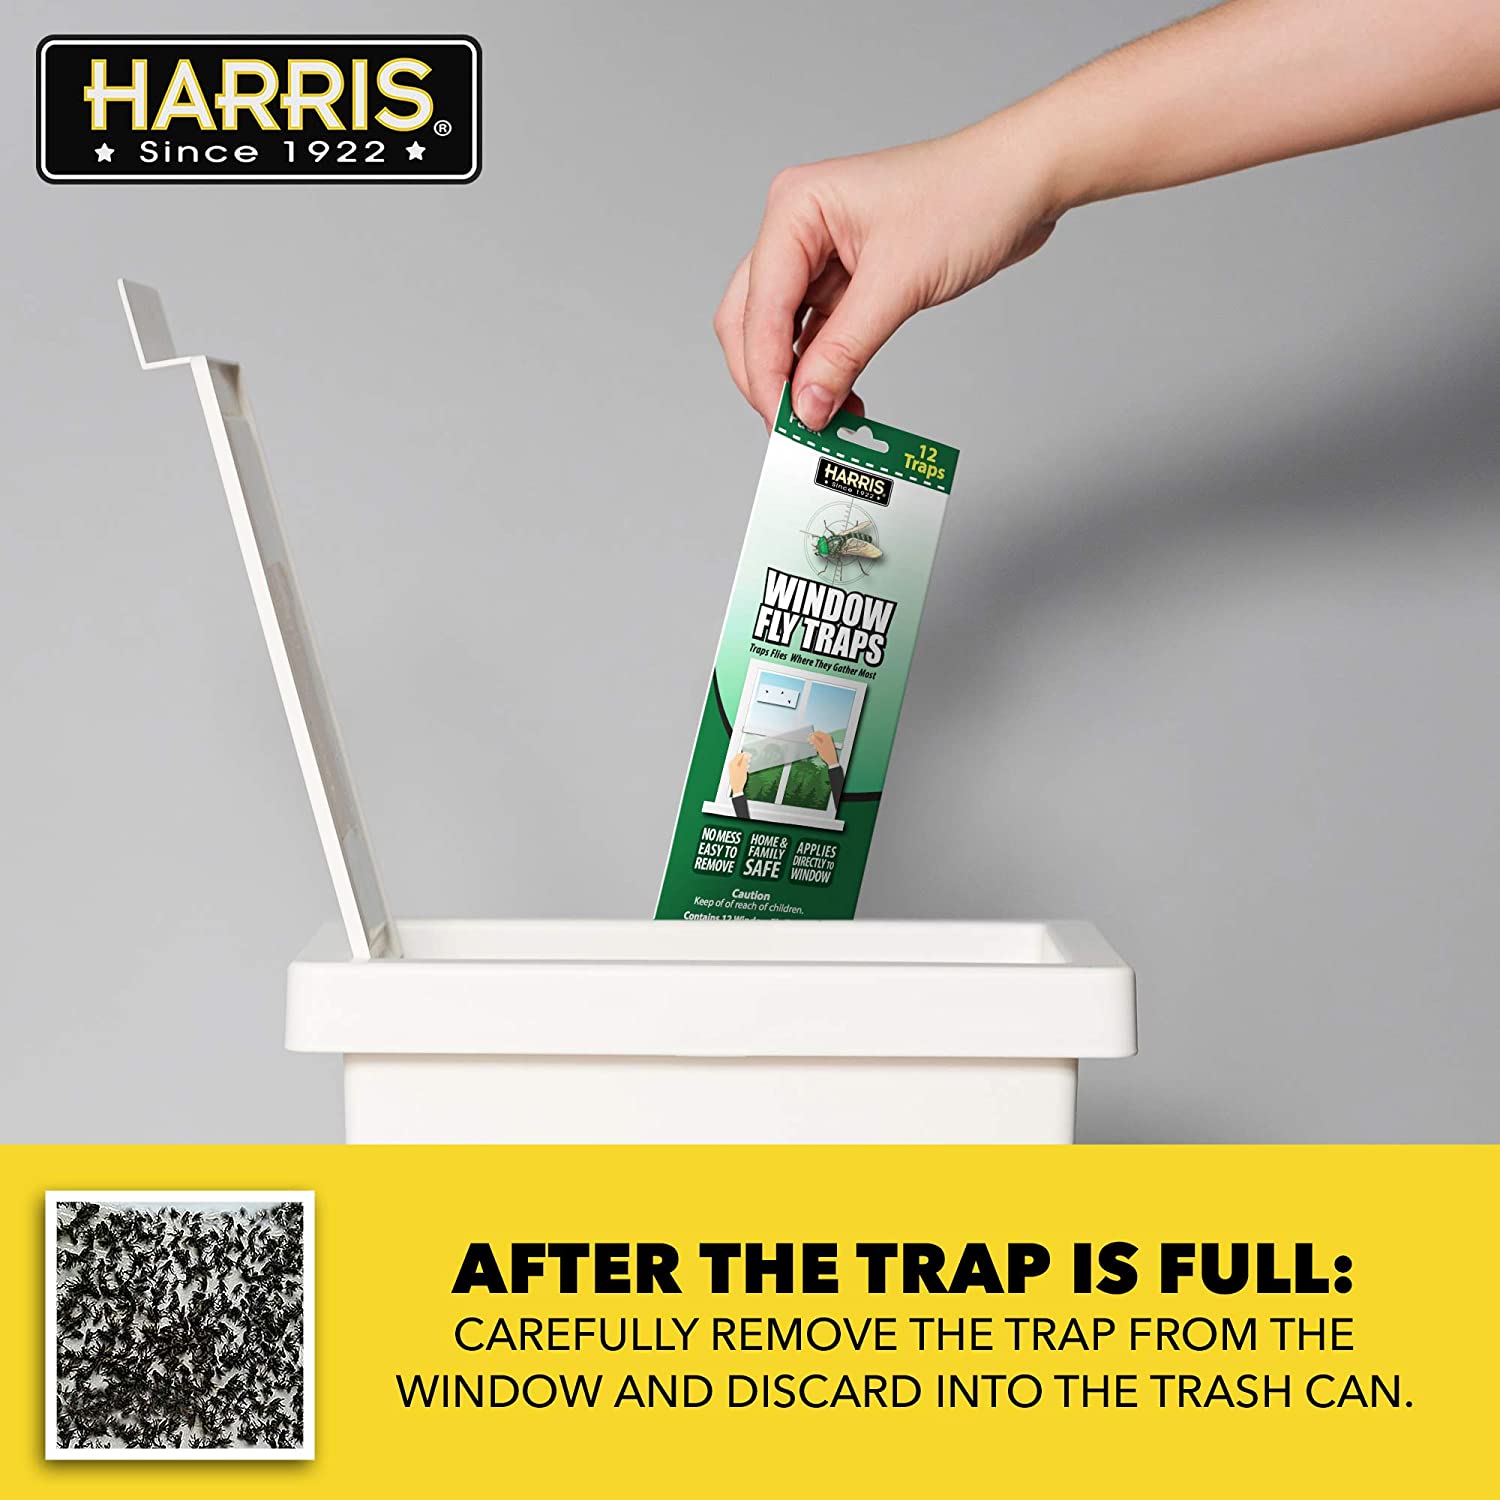 Harris Window Fly Traps / Buy Spartanburg SC / Harris Online